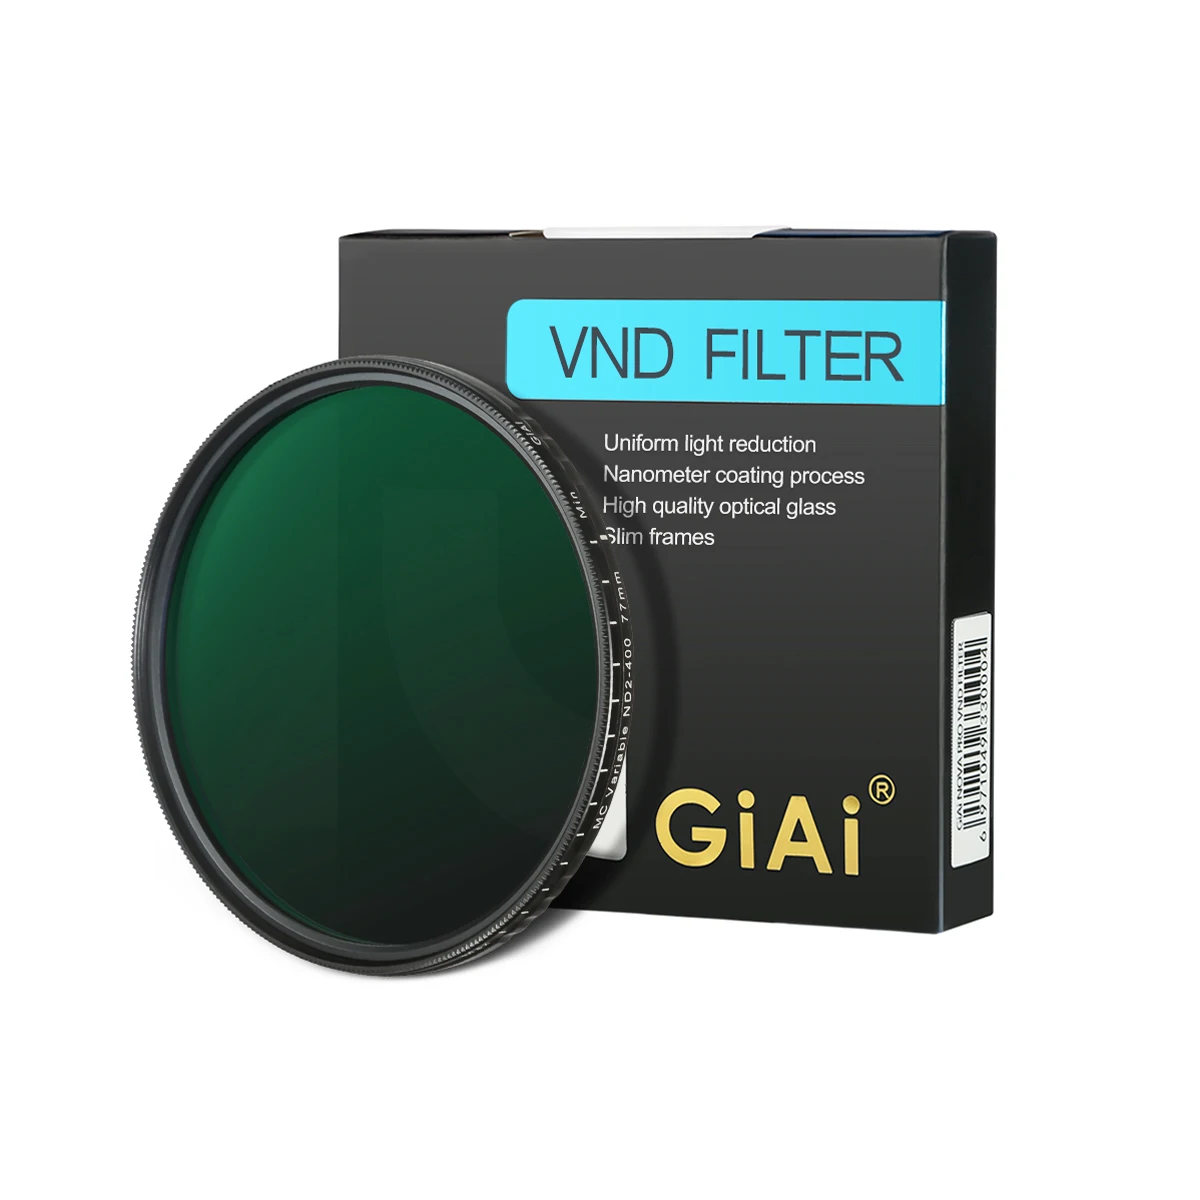 

GiAi Variable ND2-400 Filter - Nano Coating VND 1-9 Stop Neutral Density Filter for 37 40.5 49 52 55 58 62 67 72 77 82 86mm Lens